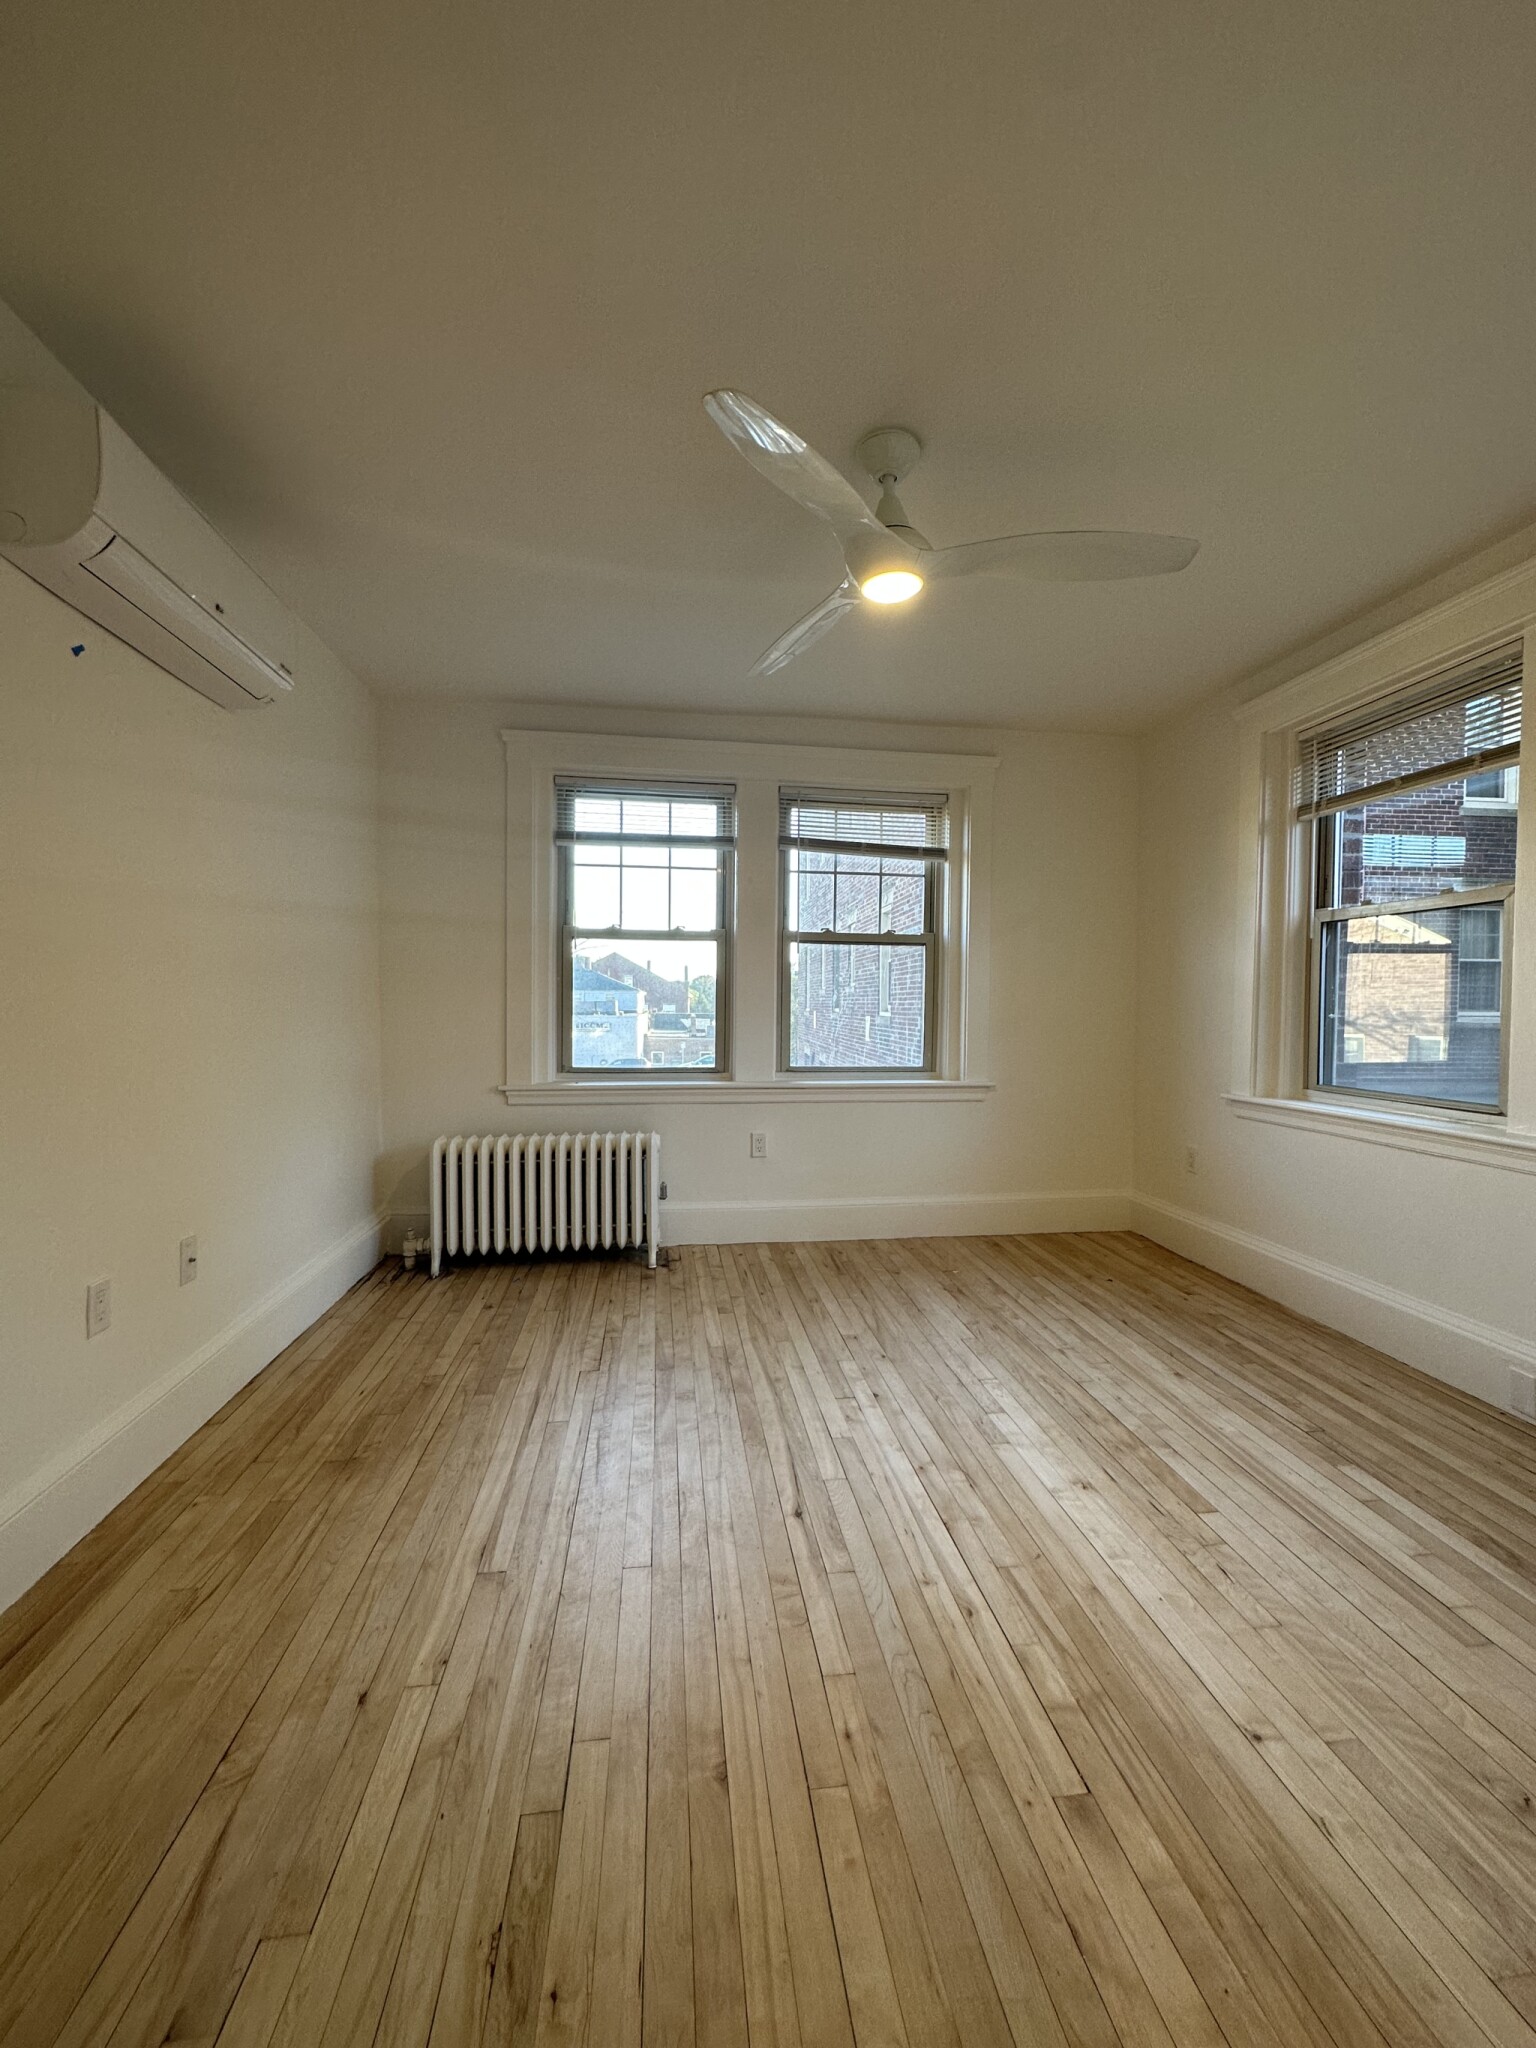 Photos of apartment on Bradlee Rd.,Medford MA 02155